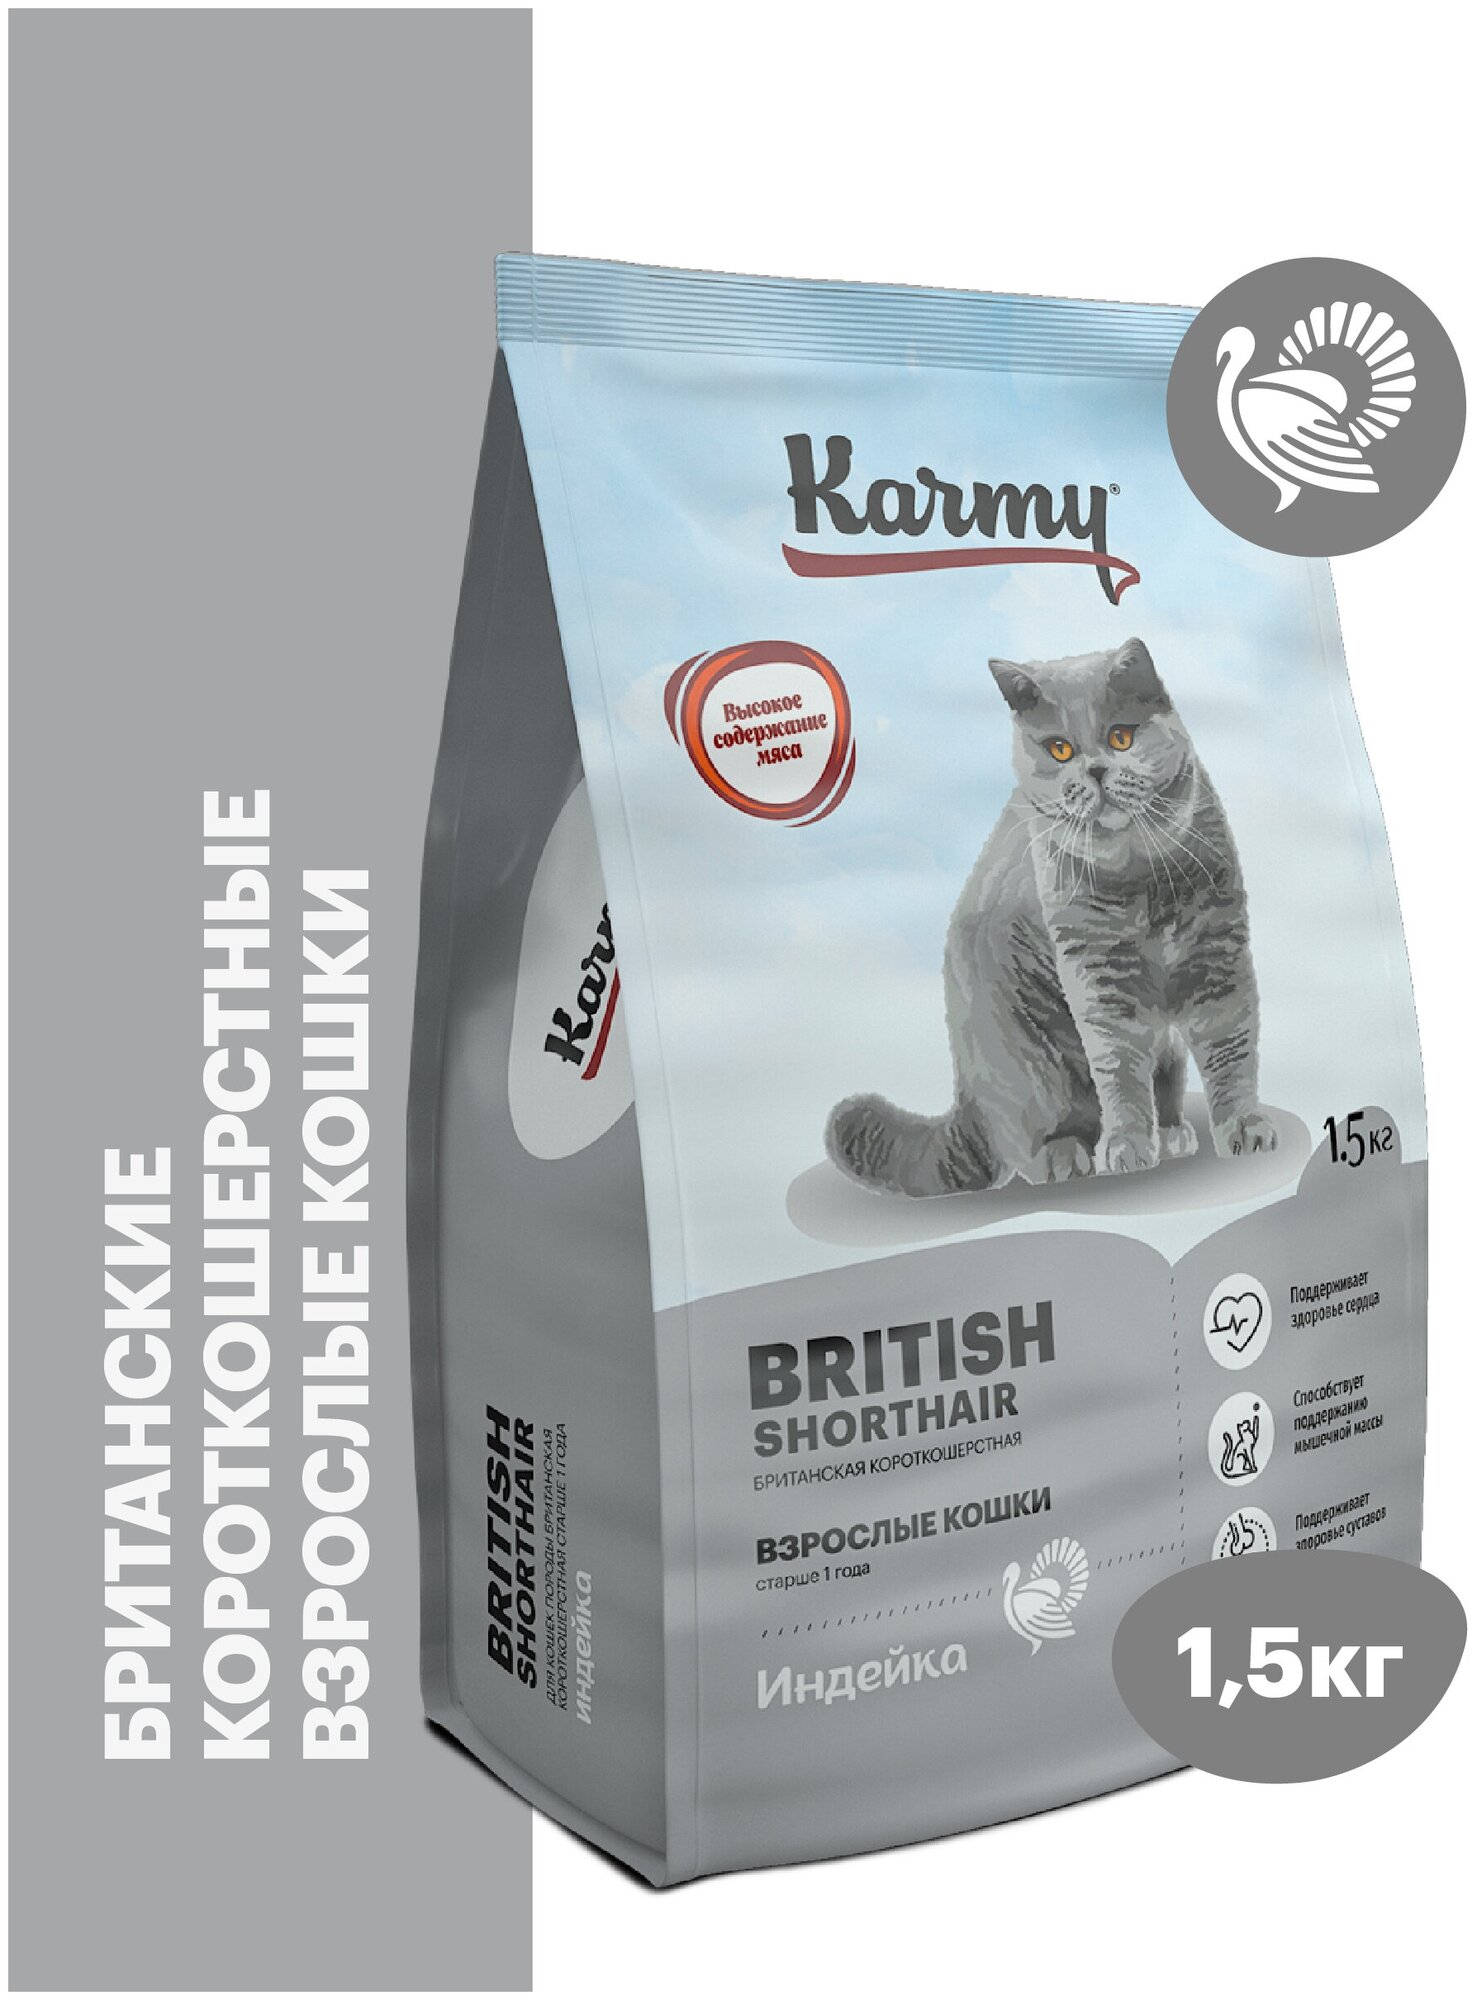 Сухой корм для кошек Karmy British Shorthair, индейка